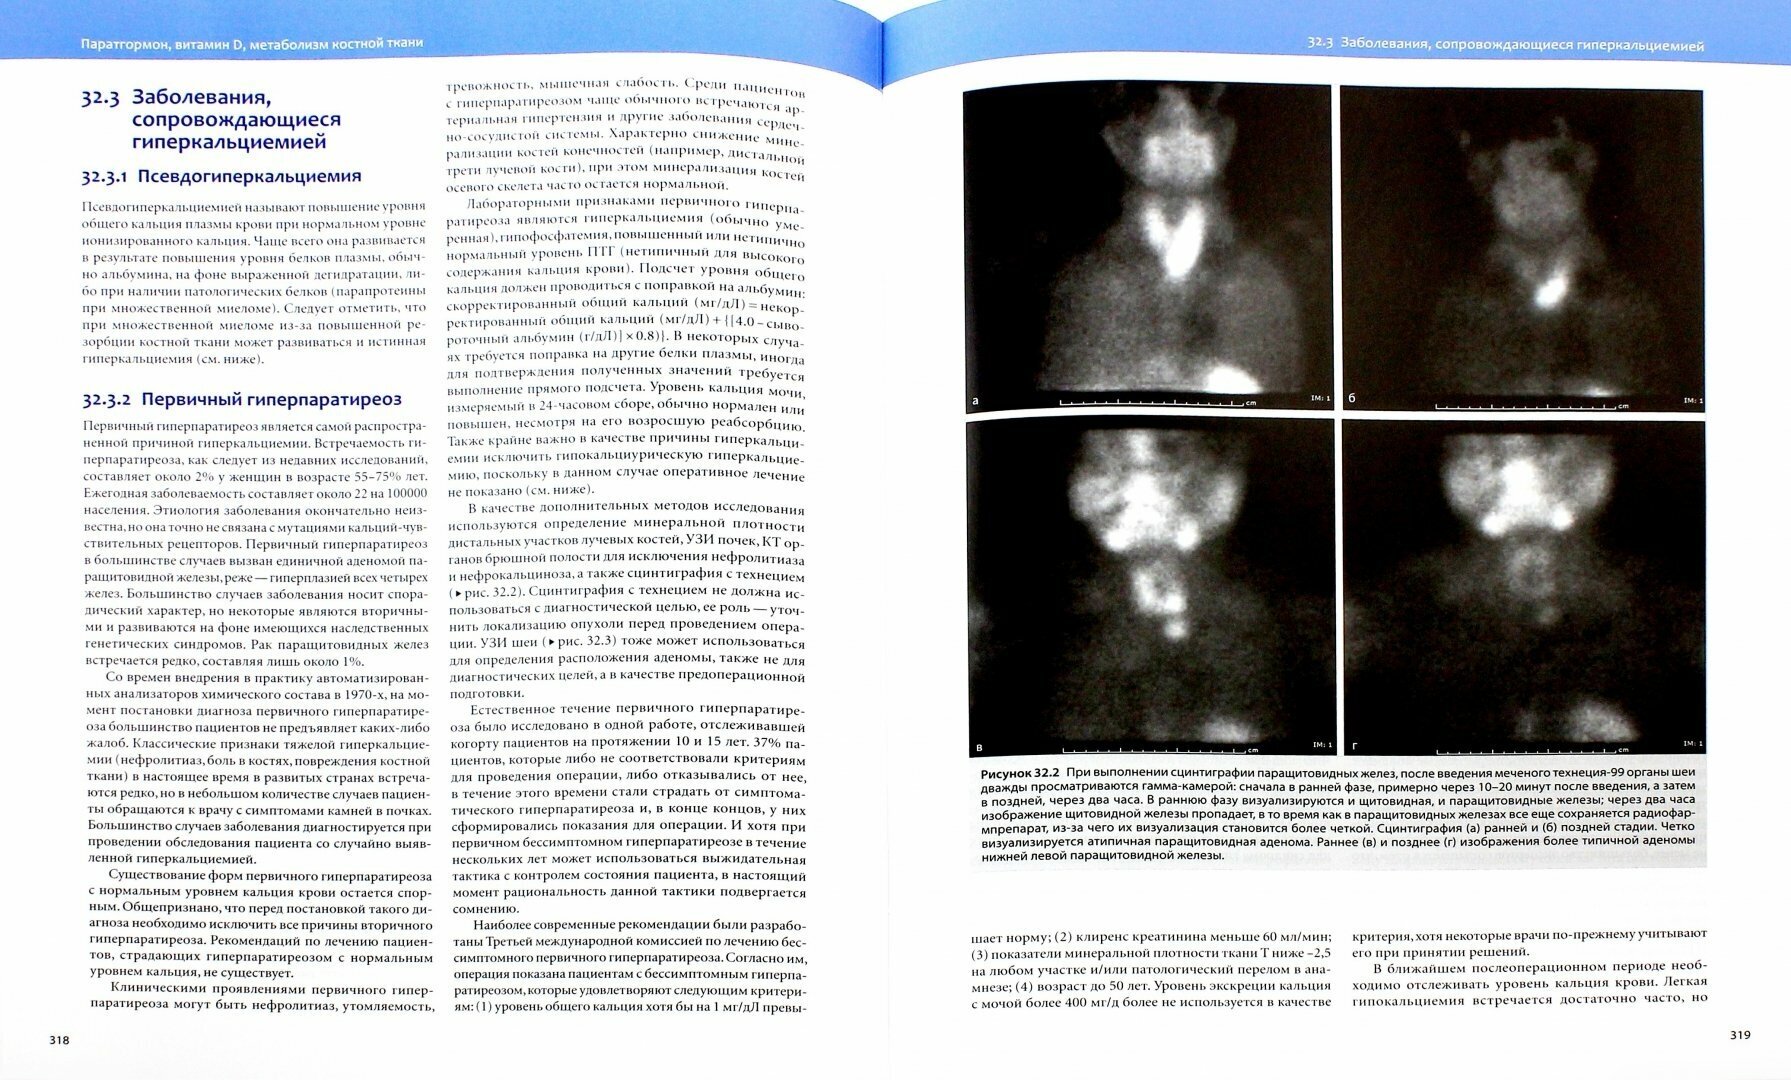 Общая оториноларингология. Хирургия головы и шеи. В 2-х томах - фото №6